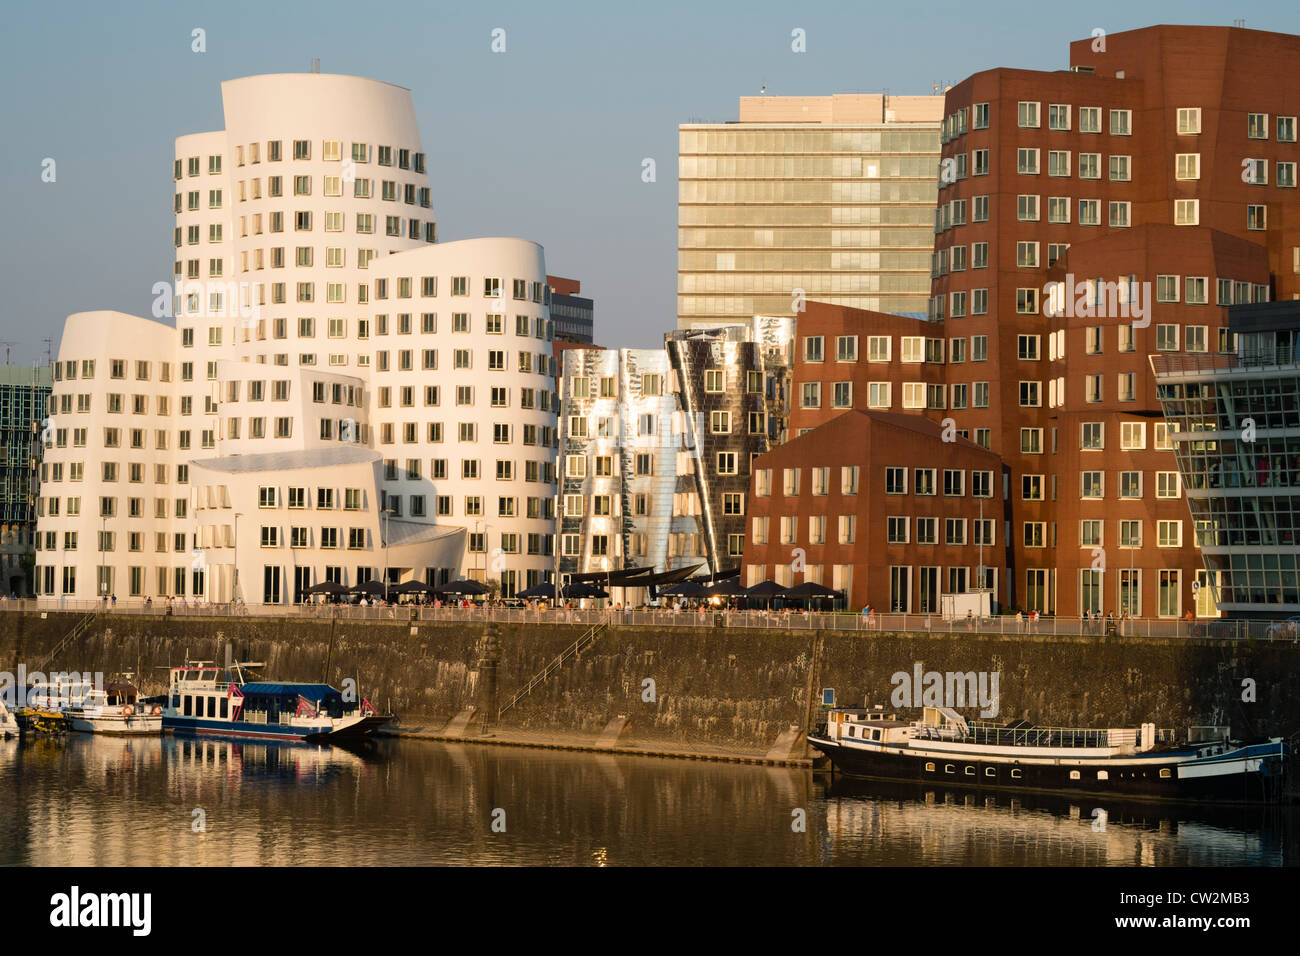 Neuer Zollhof buildings designed by Frank Gehry in Medienhafen in Düsseldorf Germany Stock Photo